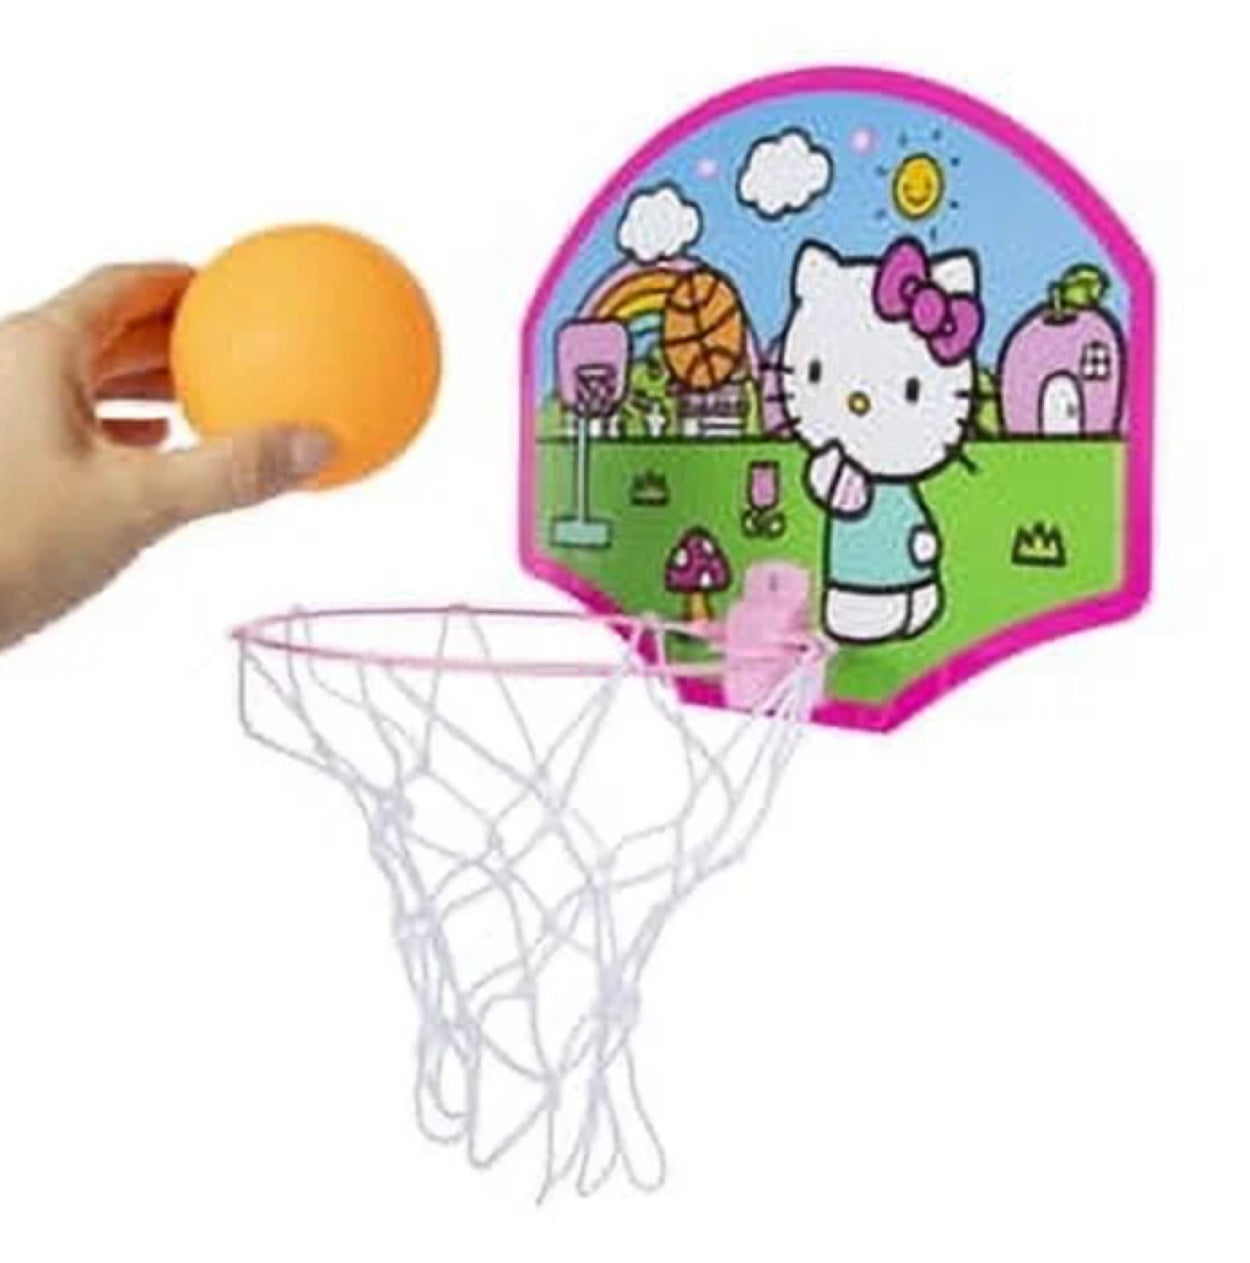 Hello Kitty Indoor Basket Ball Hoop Set